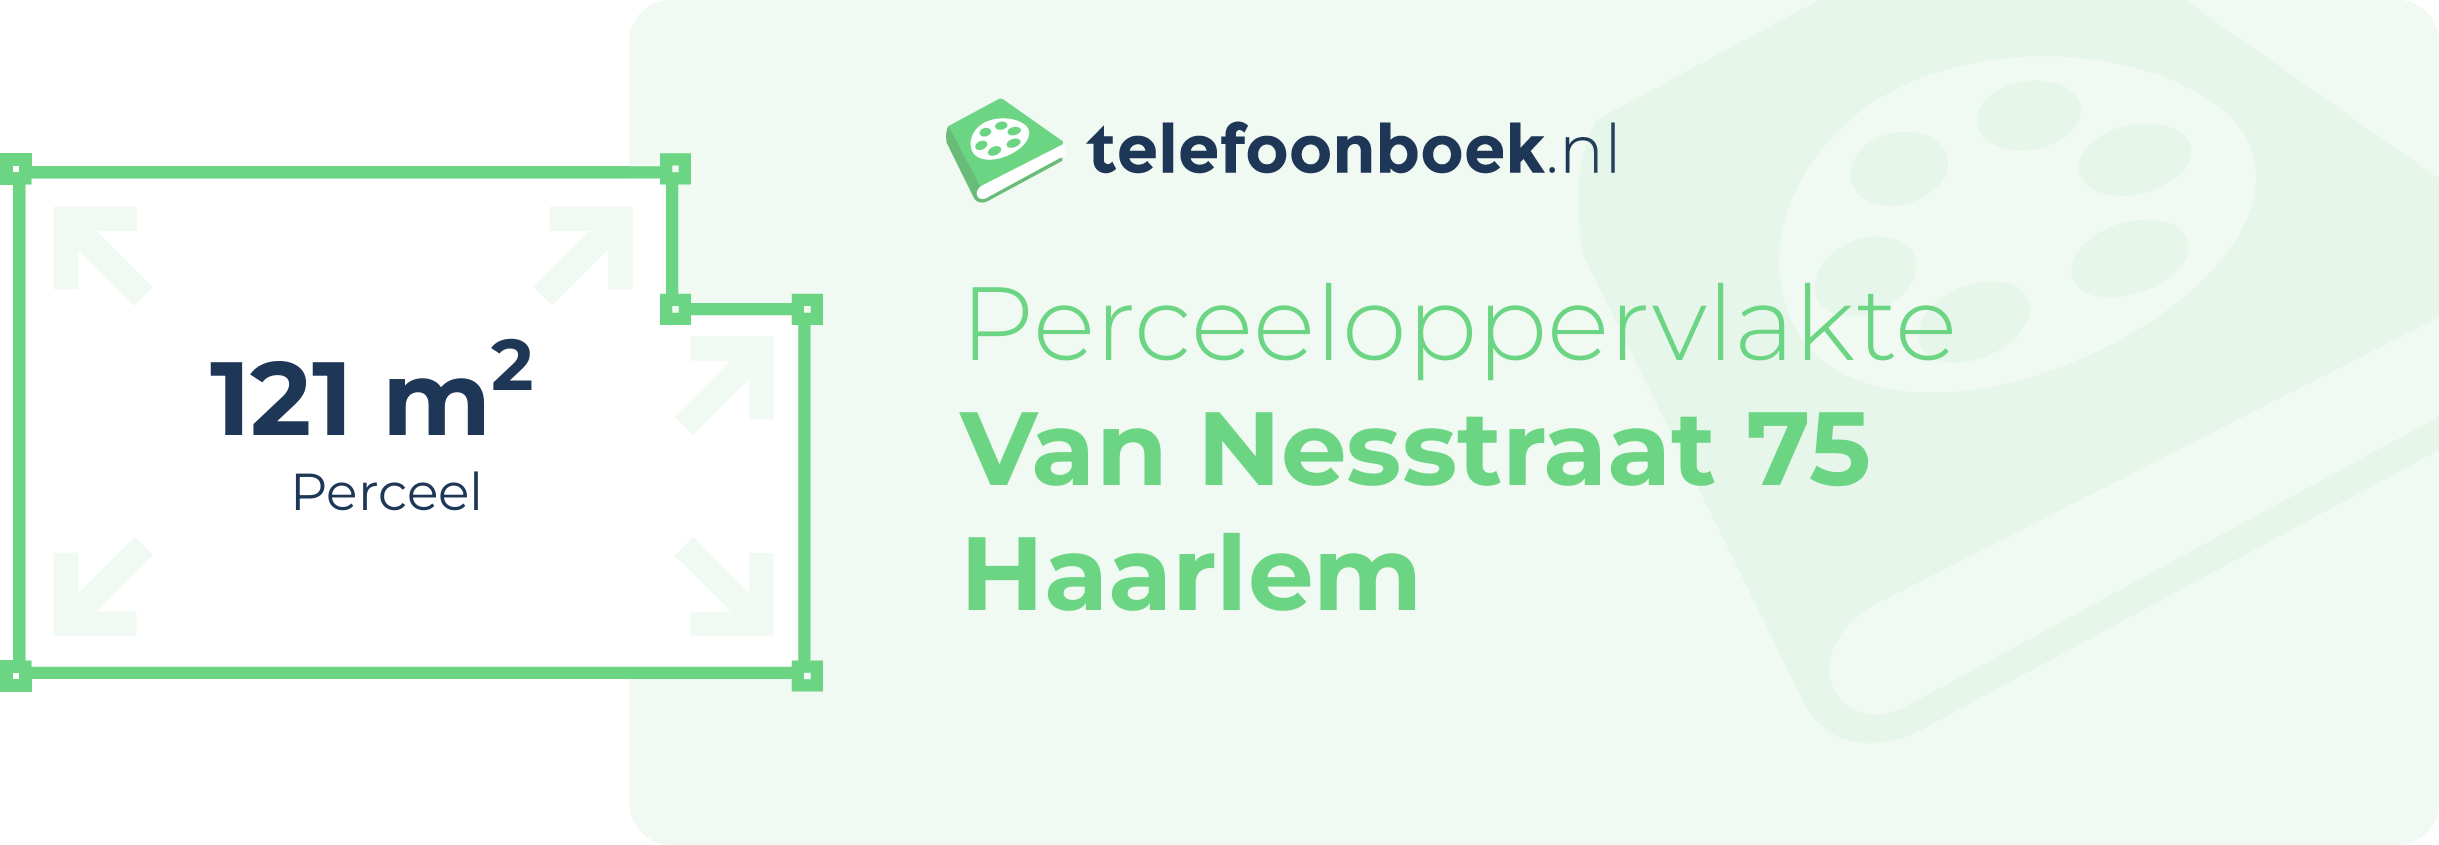 Perceeloppervlakte Van Nesstraat 75 Haarlem